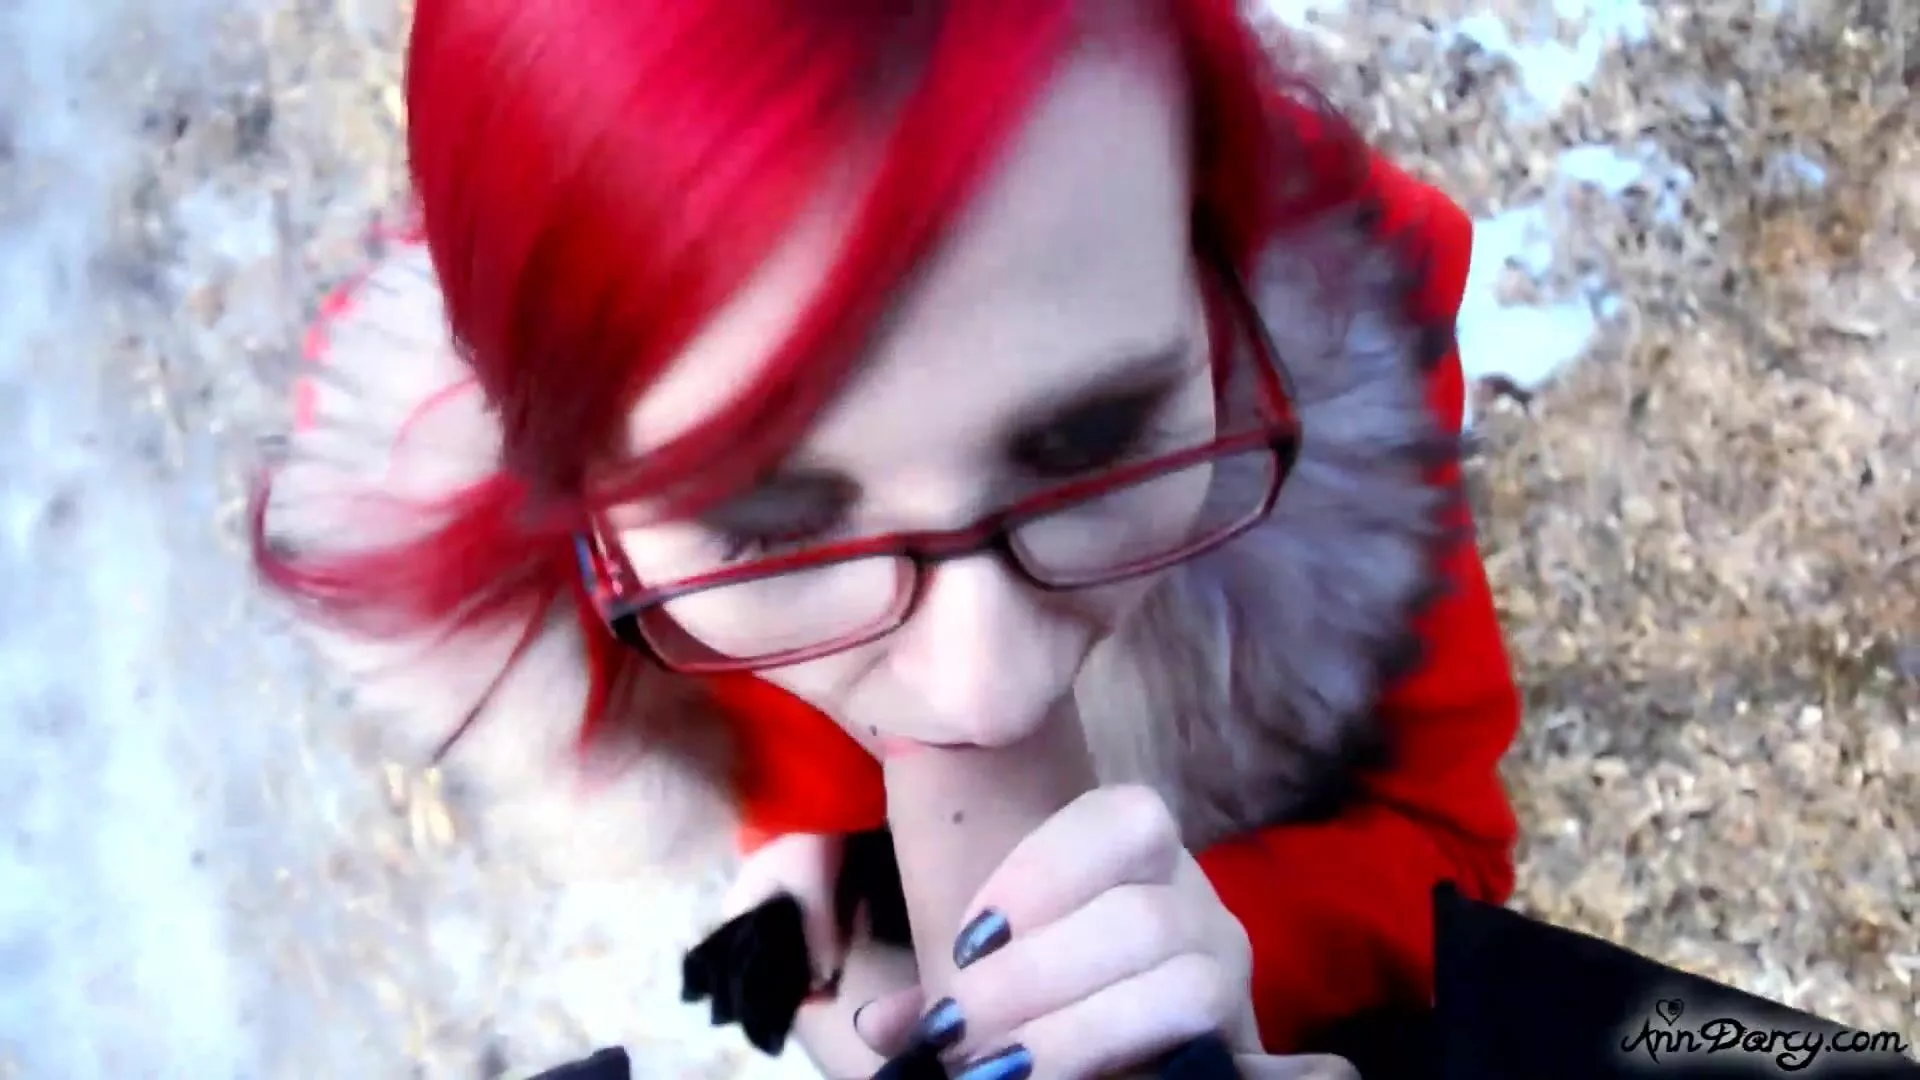 Redhead Glasses Cumshot - AnnDarcy redhead slut gets heavy facial cumshot outdoors xxx video